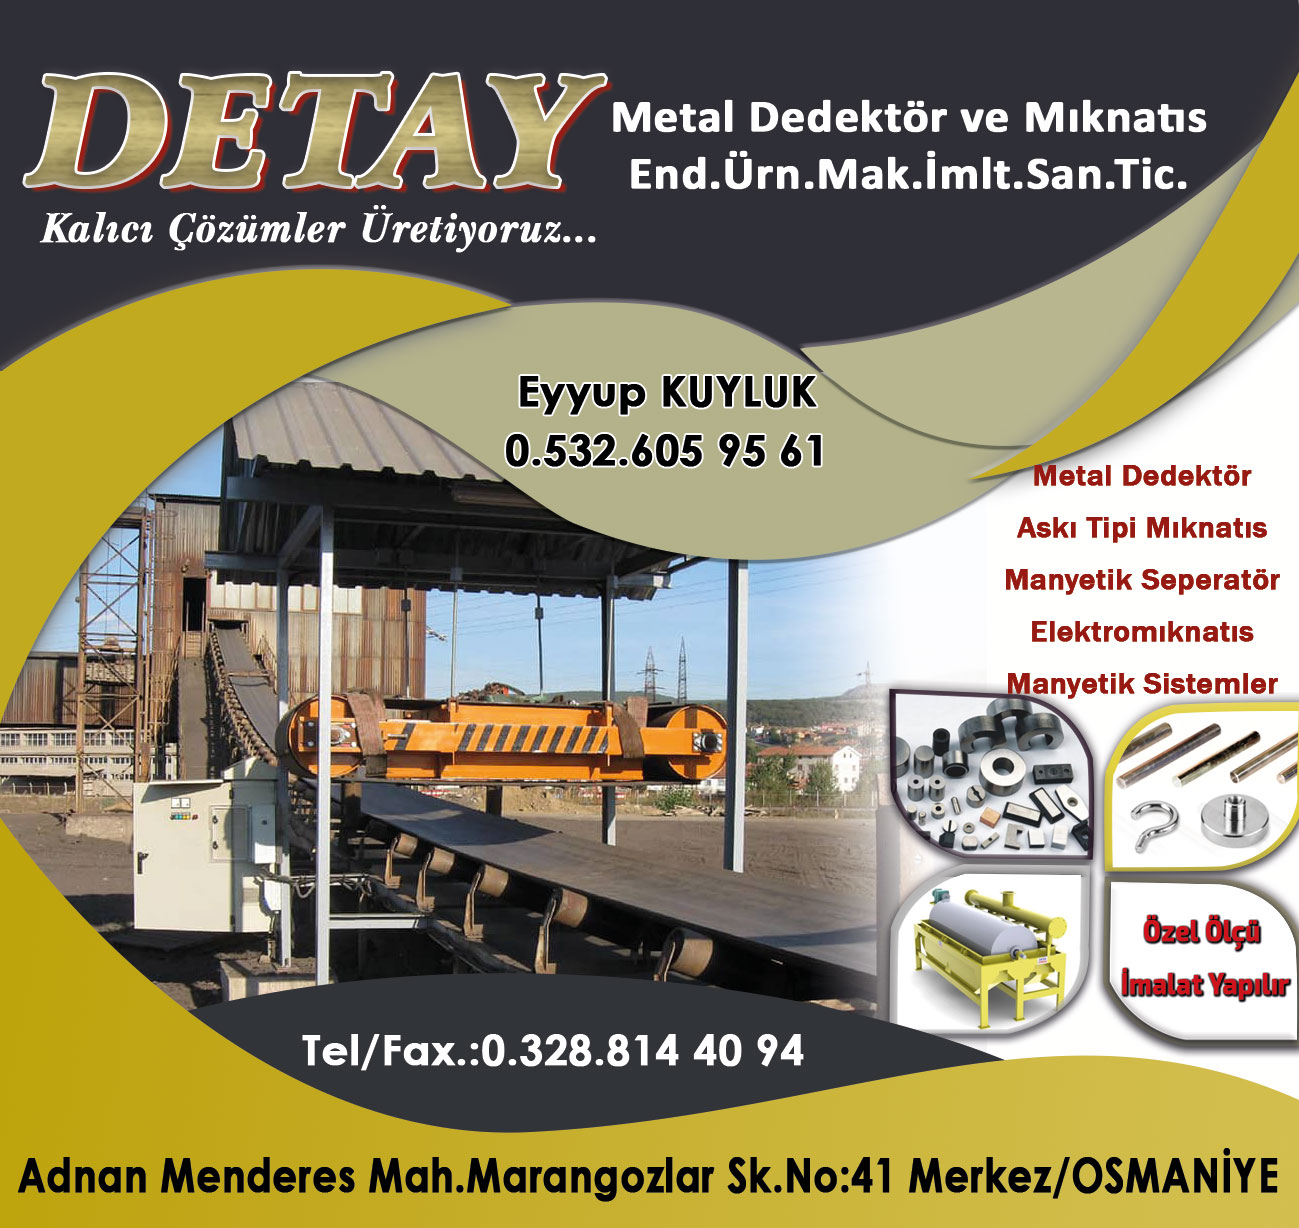 detay-metal-dedektor-ve-miknatis-osmaniye